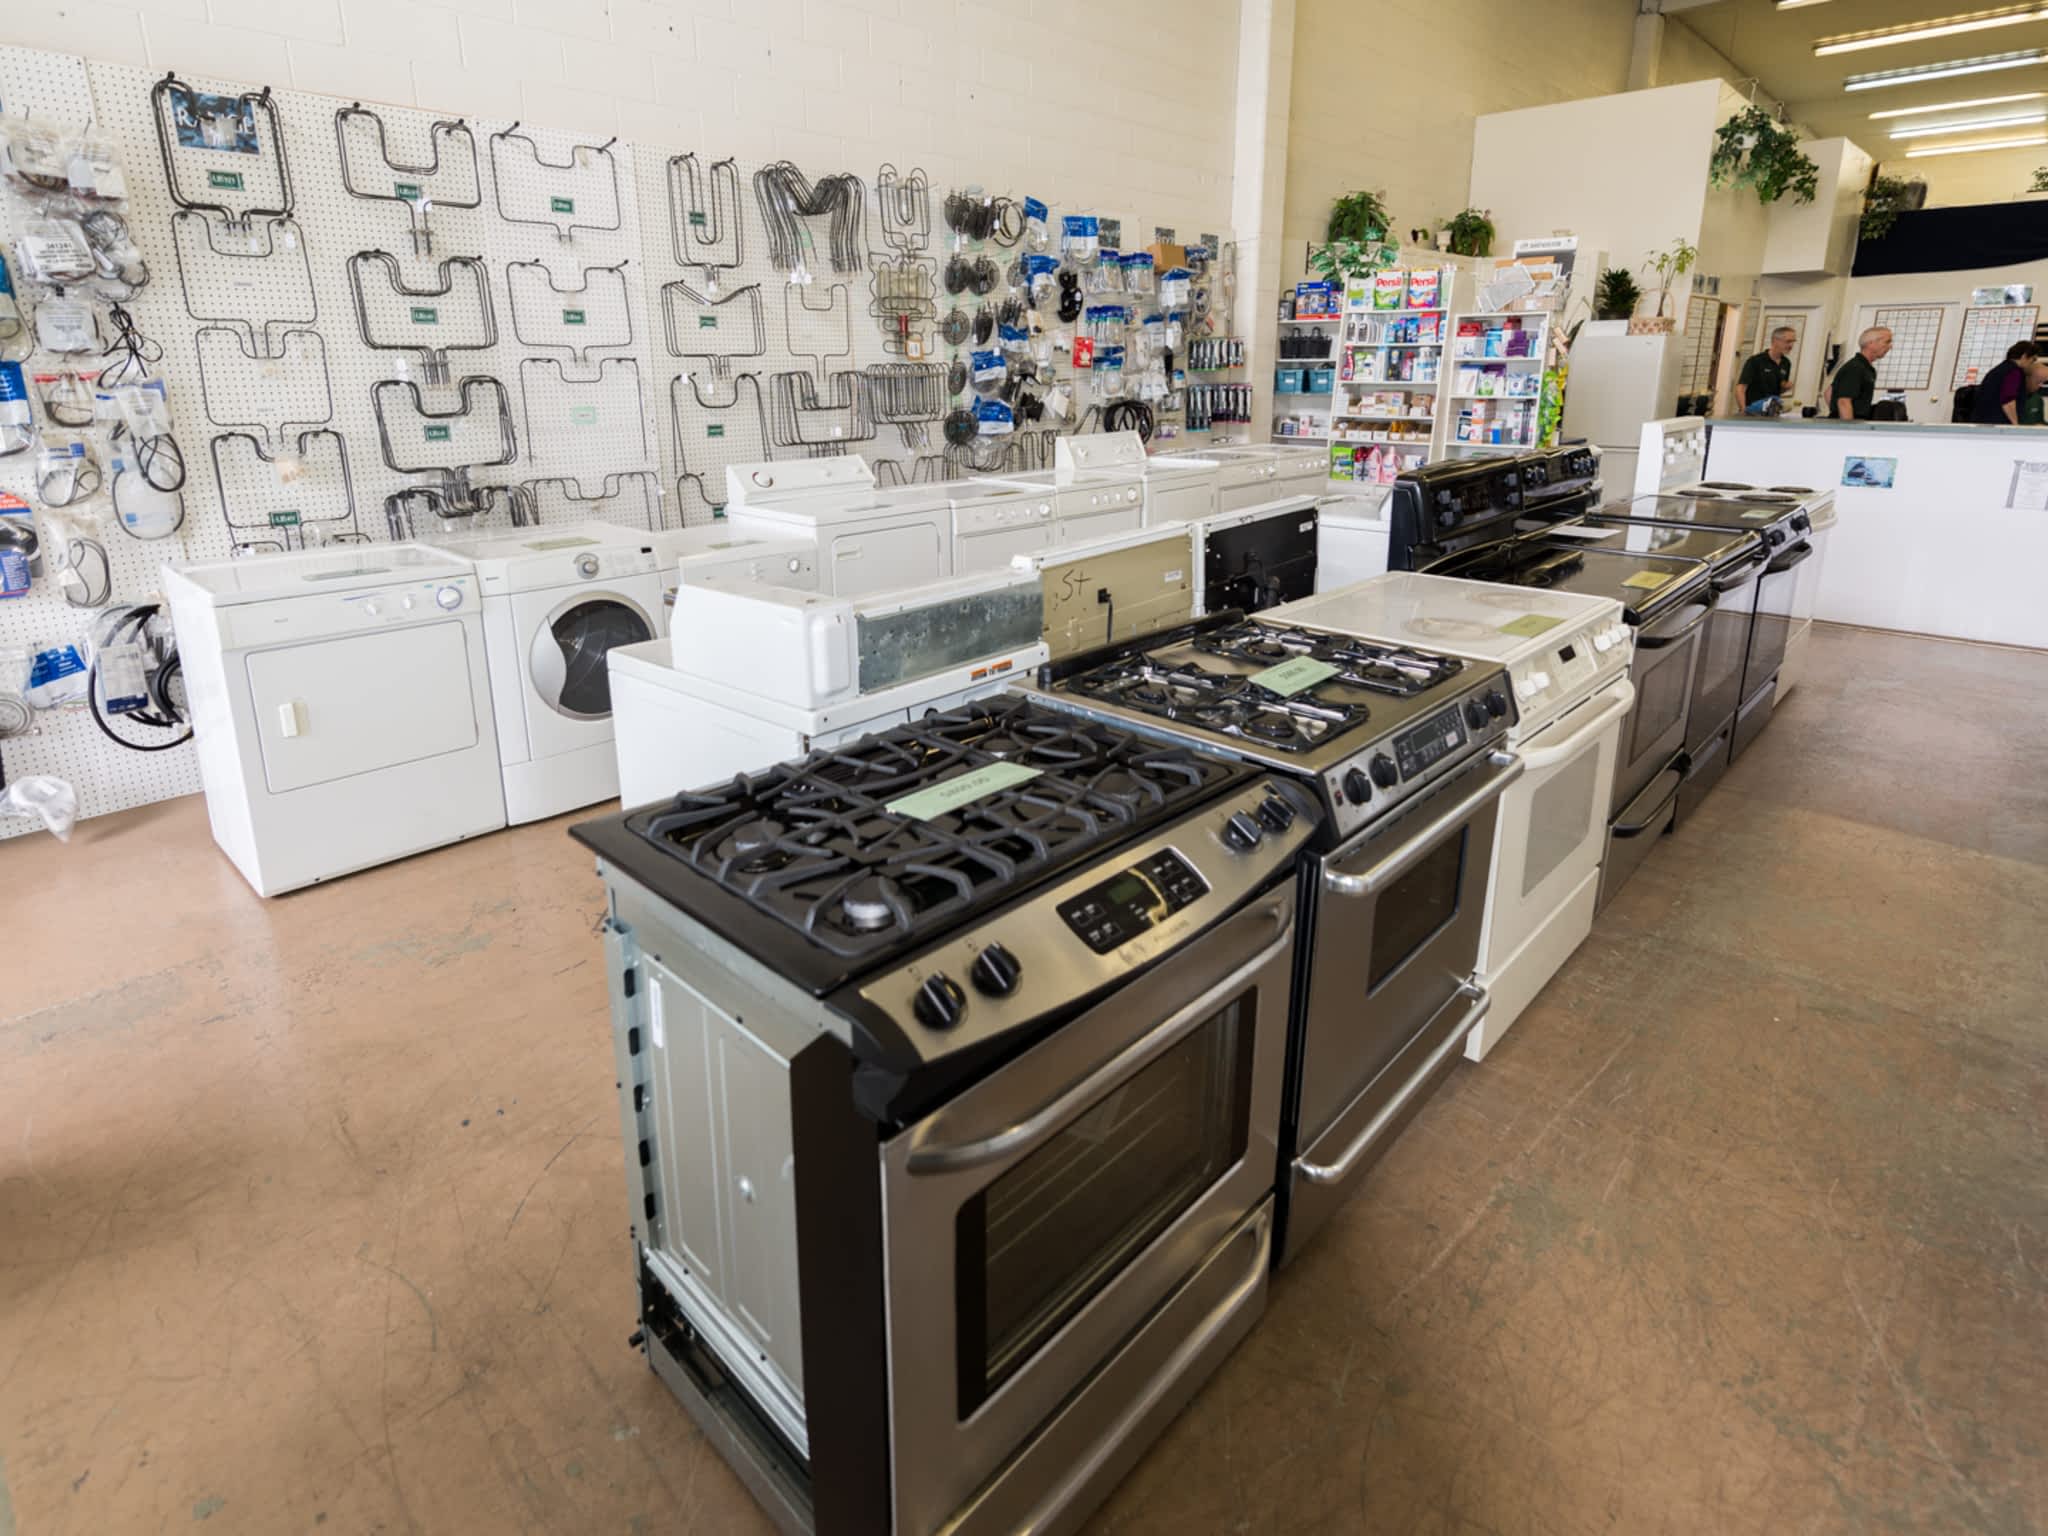 photo Barron's Home Appliance Centre Ltd